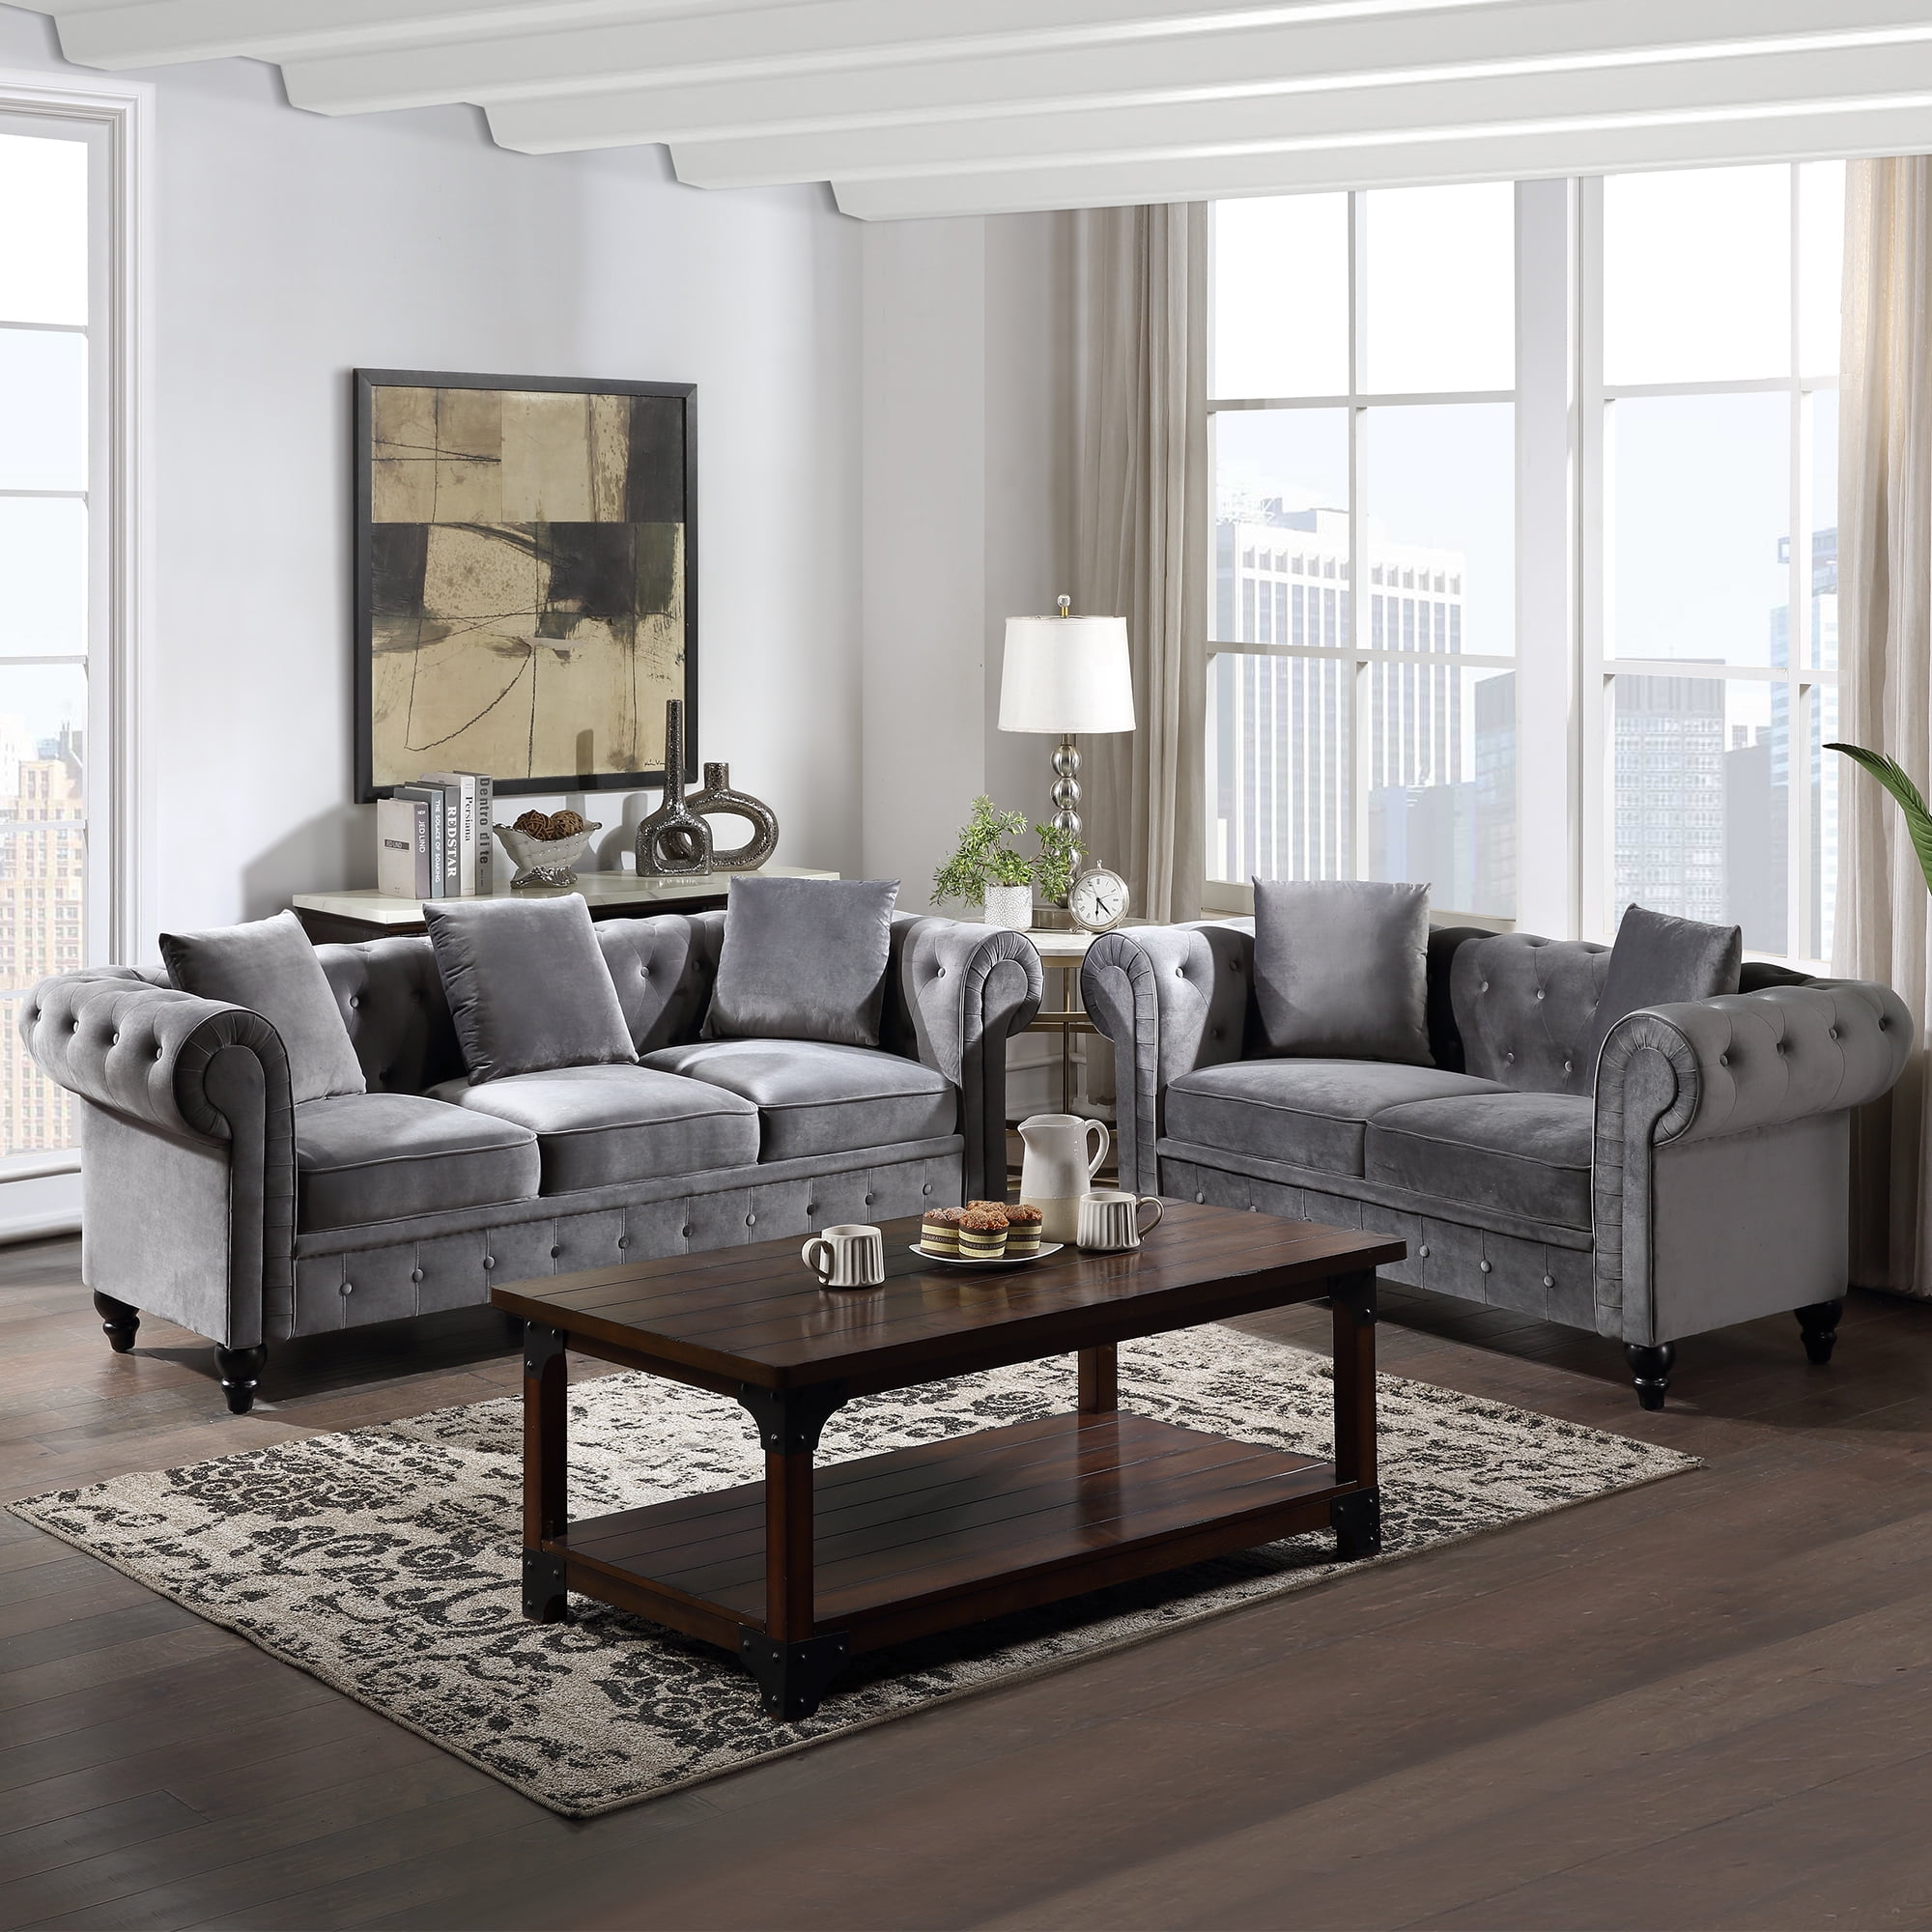 Living Room Furniture Sets, 2 Pieces Living Room Sofa Sets, Mid